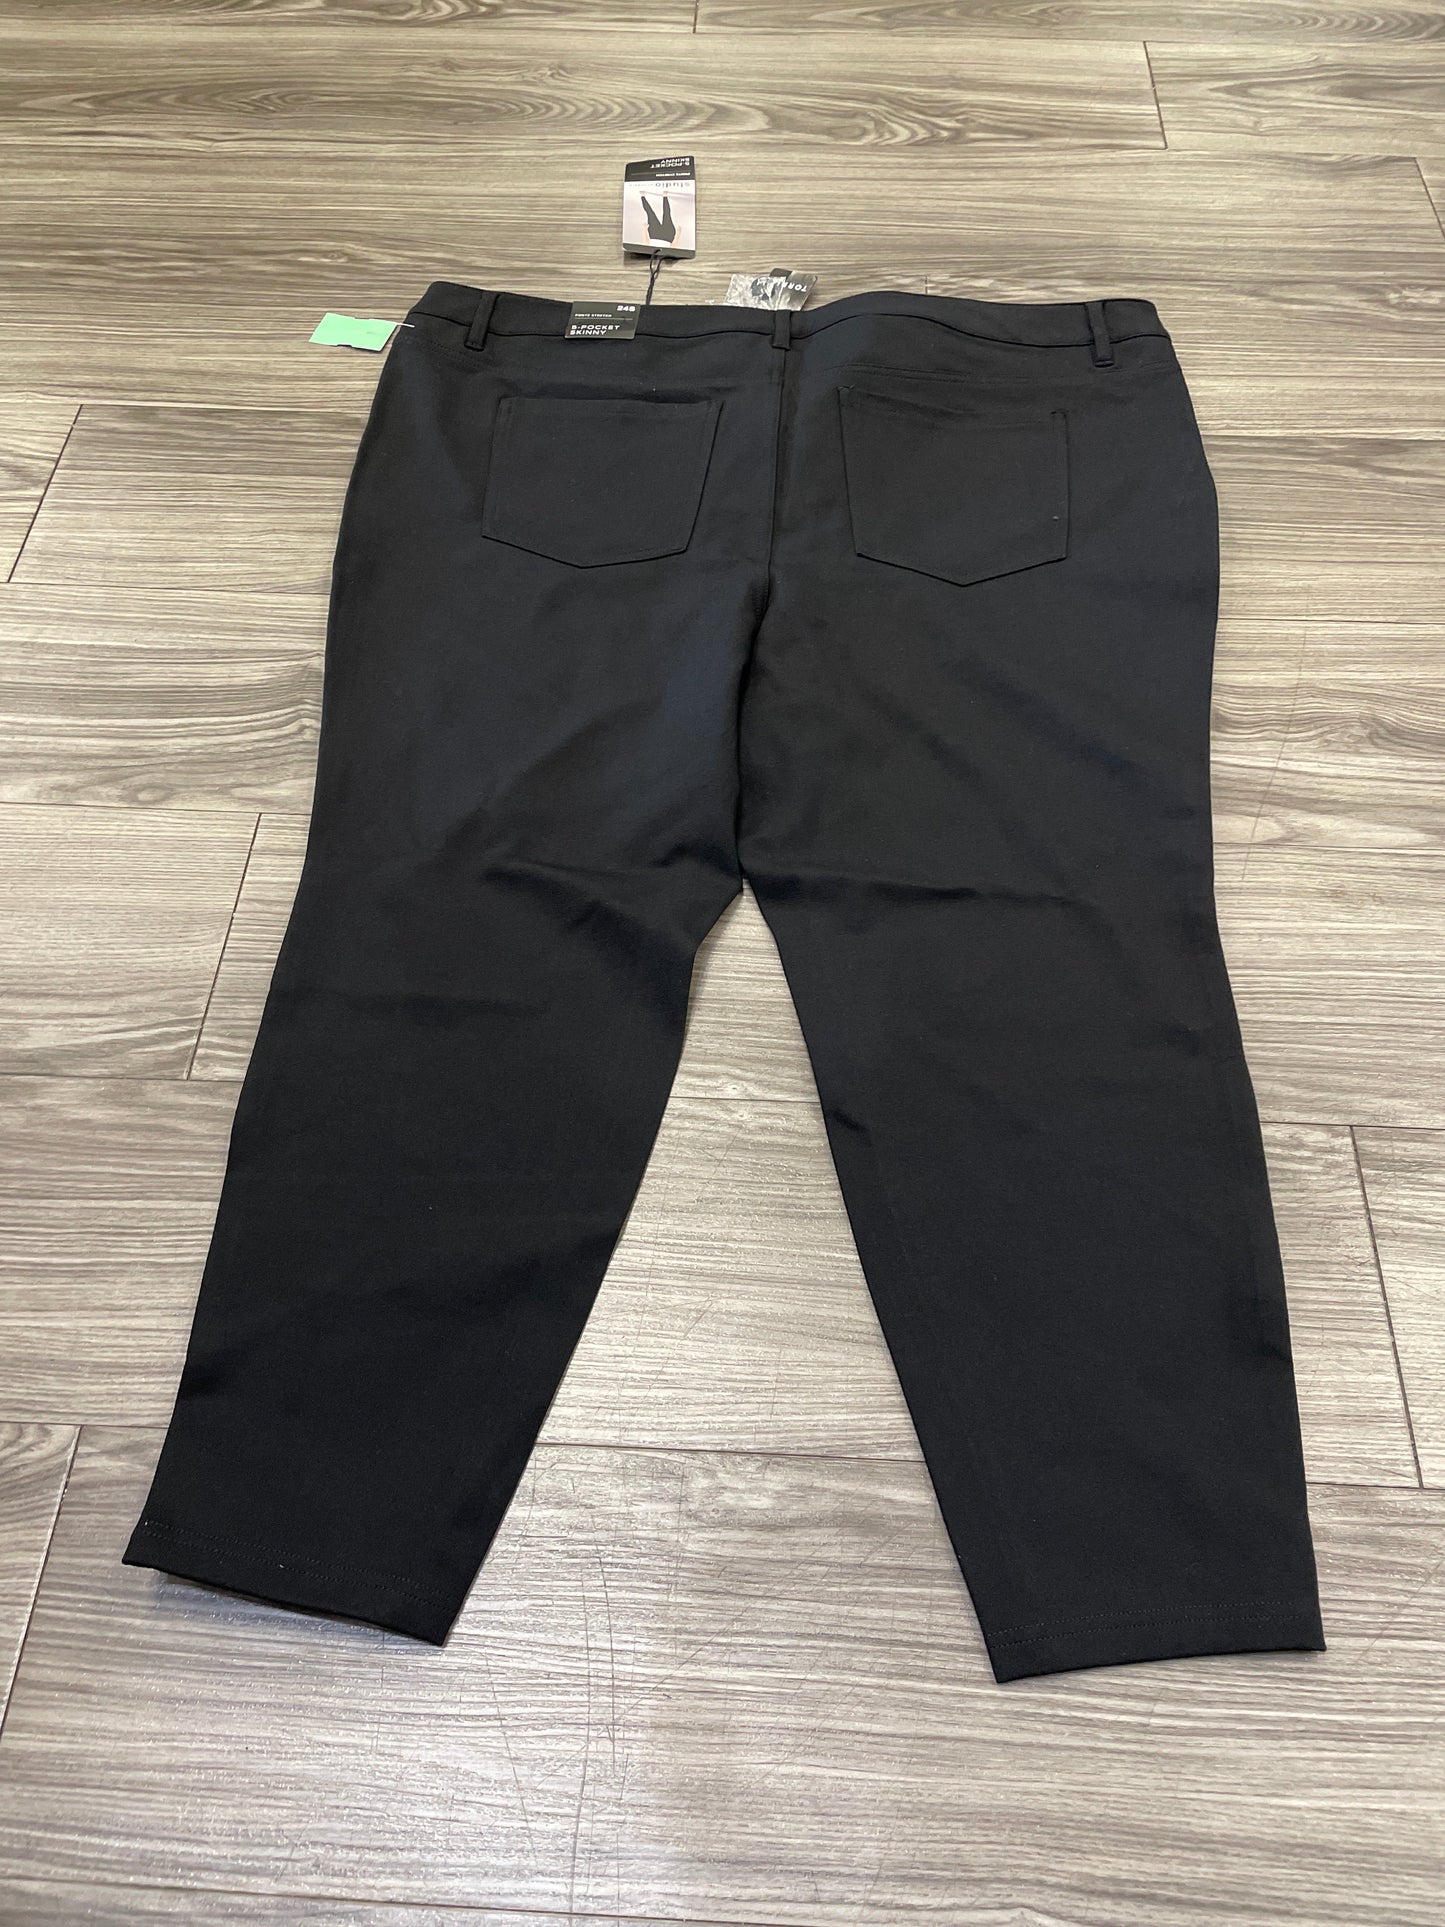 Black Pants Dress Torrid, Size 24